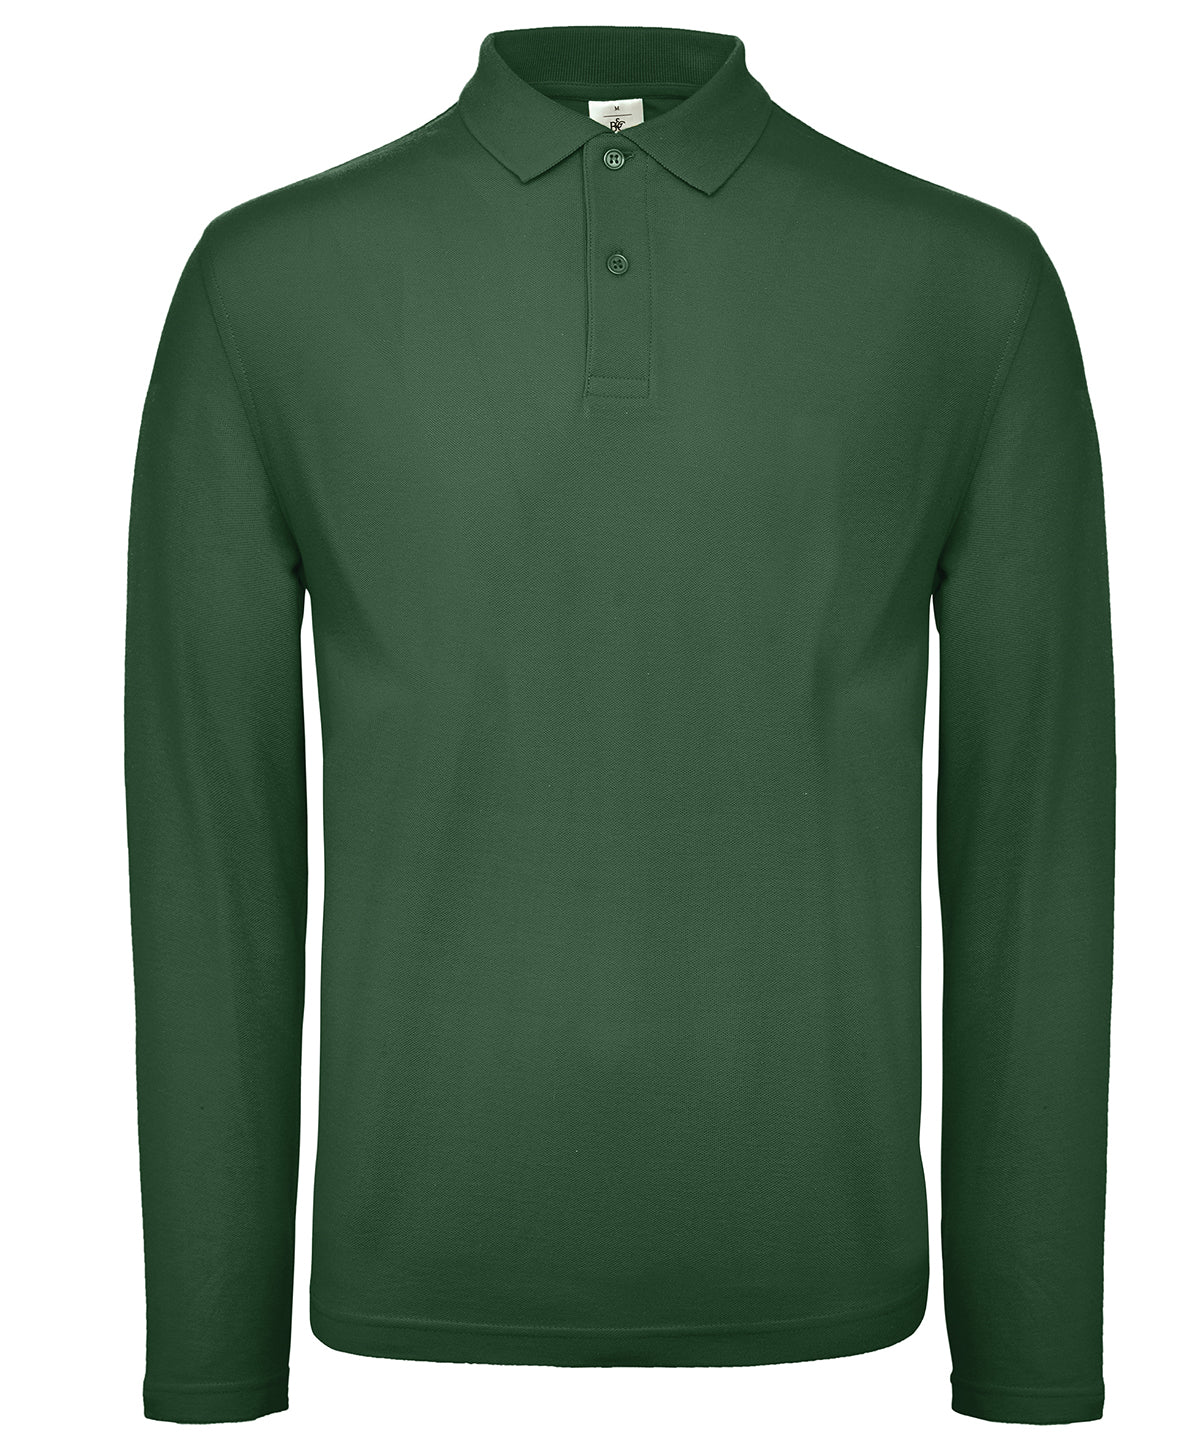 Personalised Polo Shirts - Black B&C Collection B&C ID.001 LSL